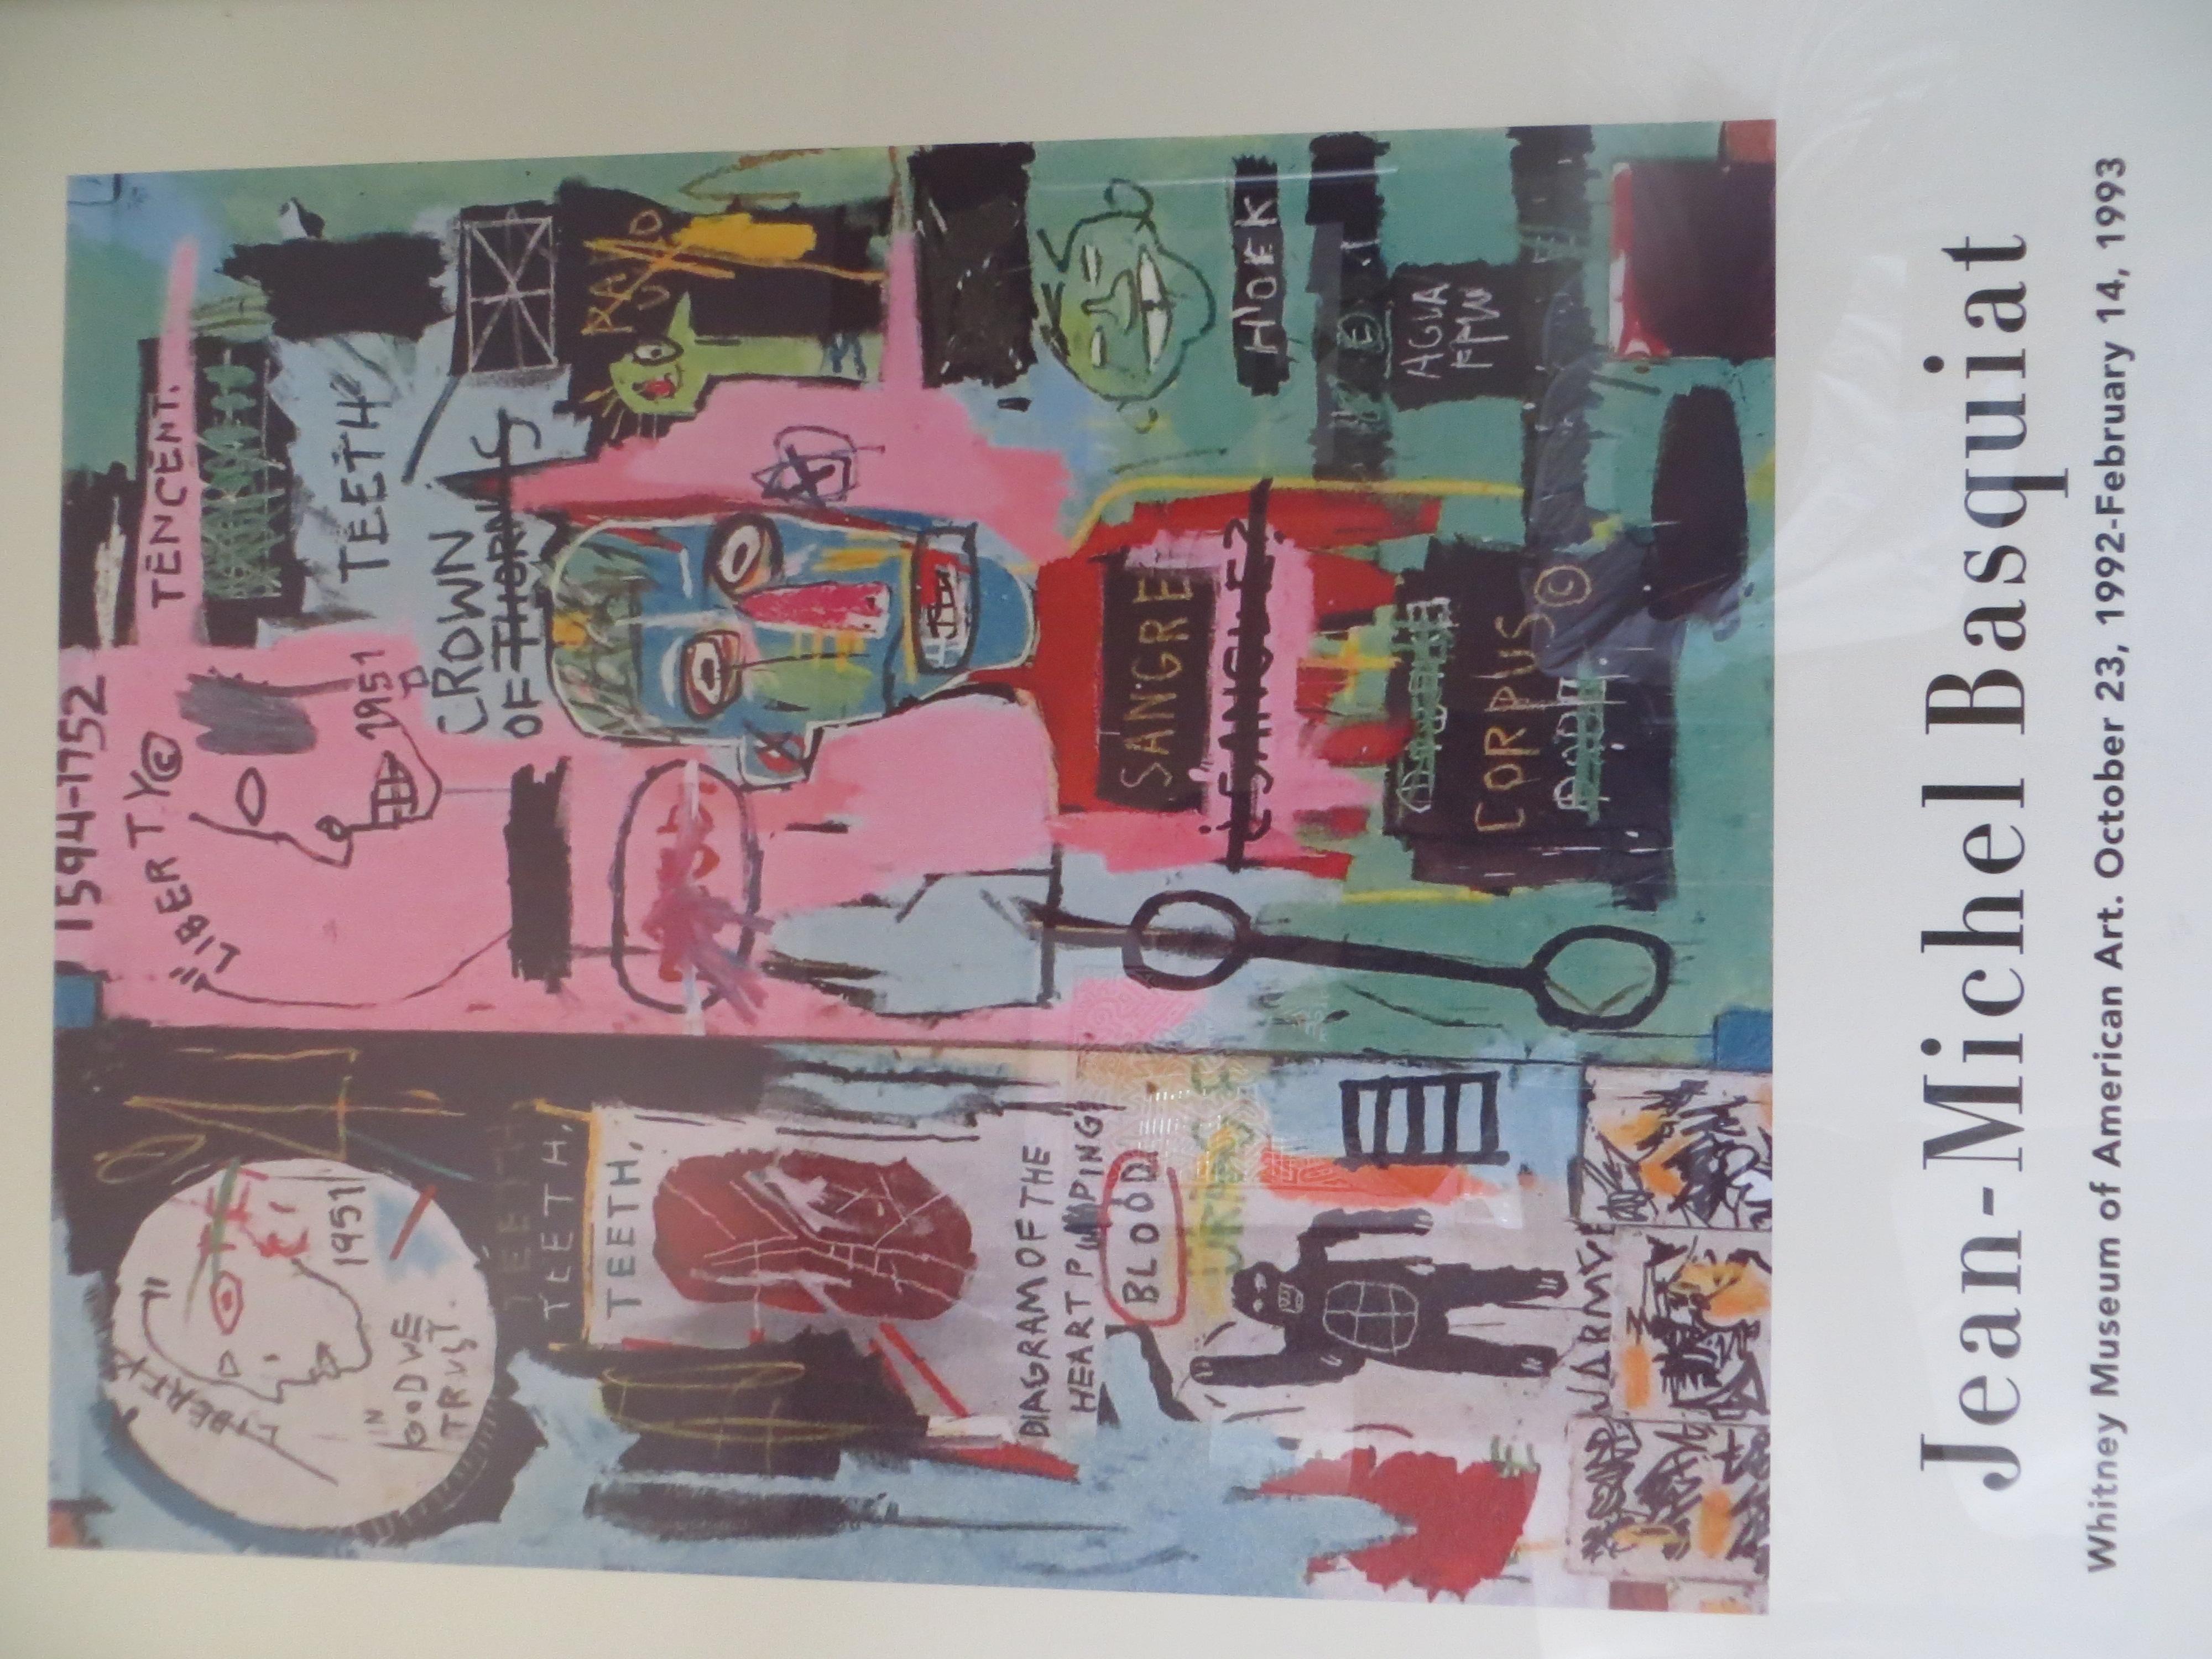  Jean-Michel Basquiat  Exhibition Poster - Print by after Jean-Michel Basquiat